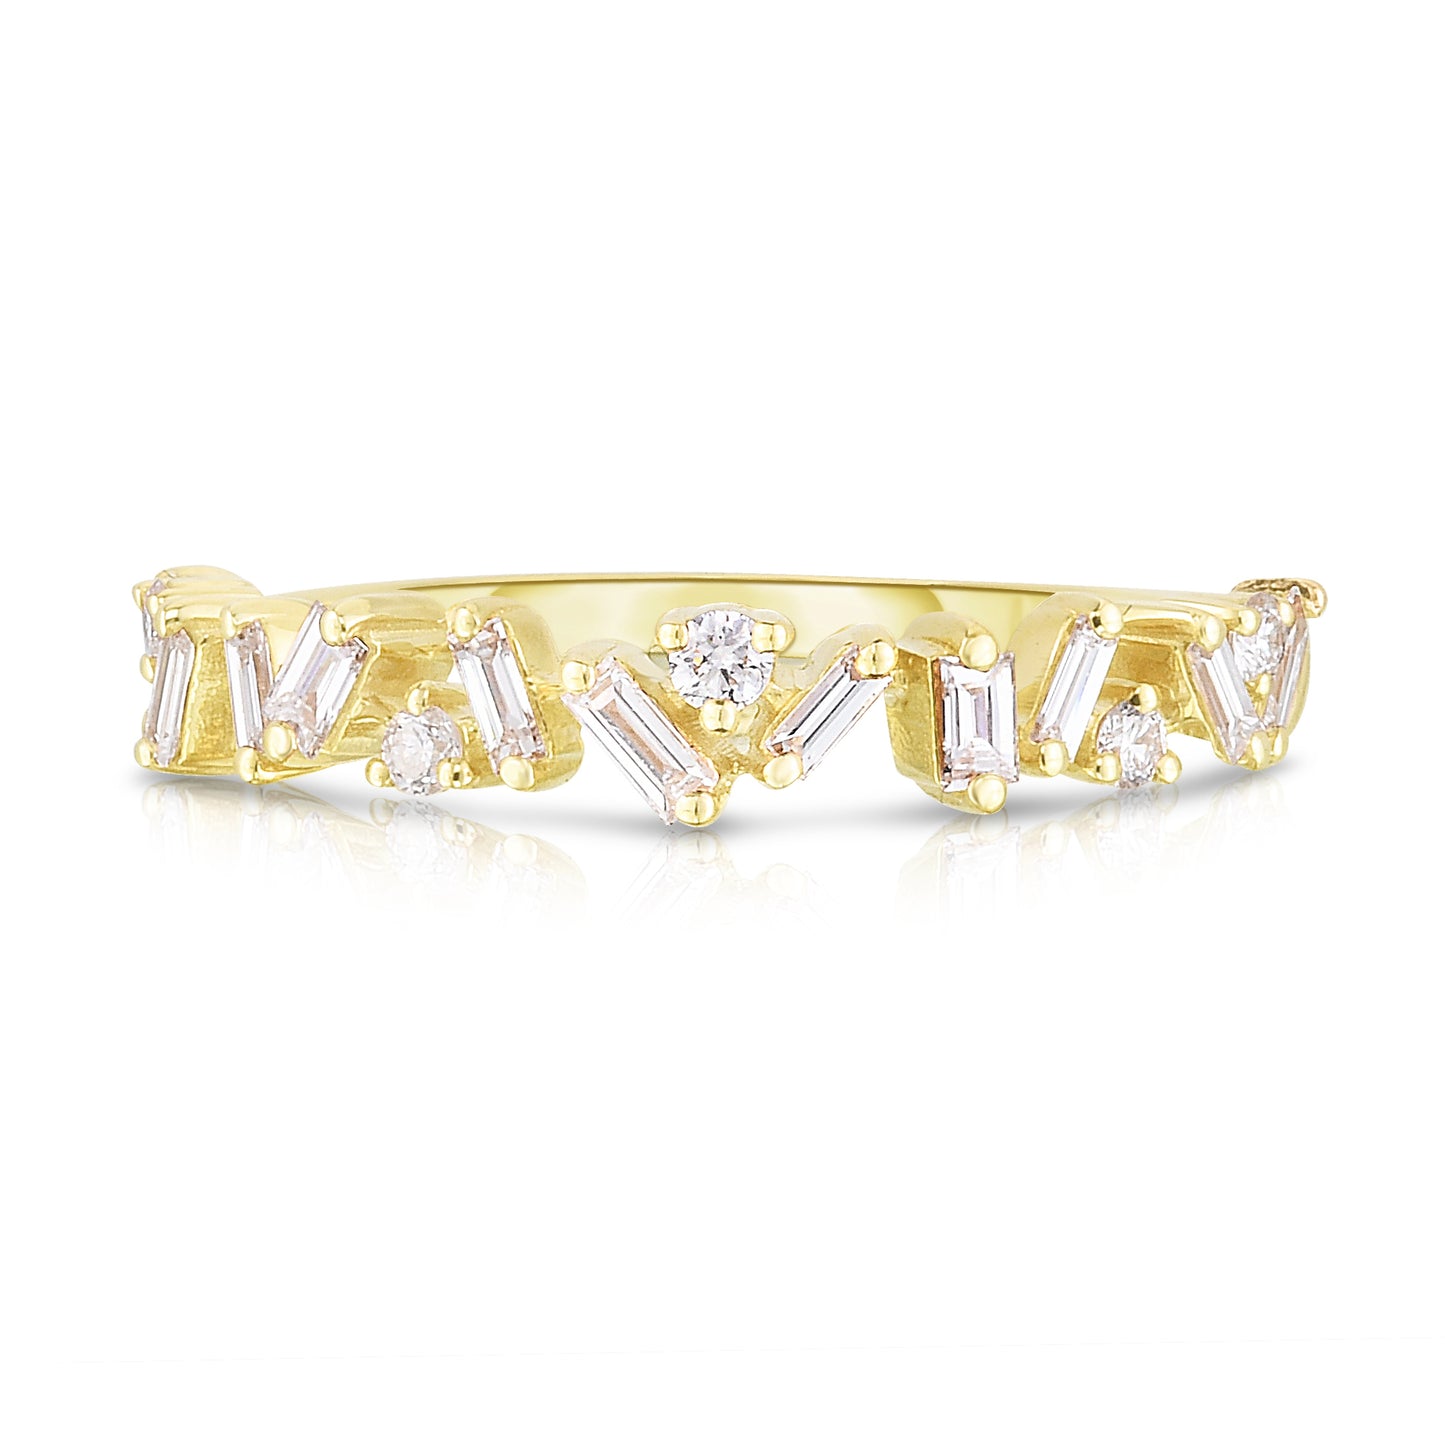 Mixed Shape Diamond Ring in 14K Yellow Gold